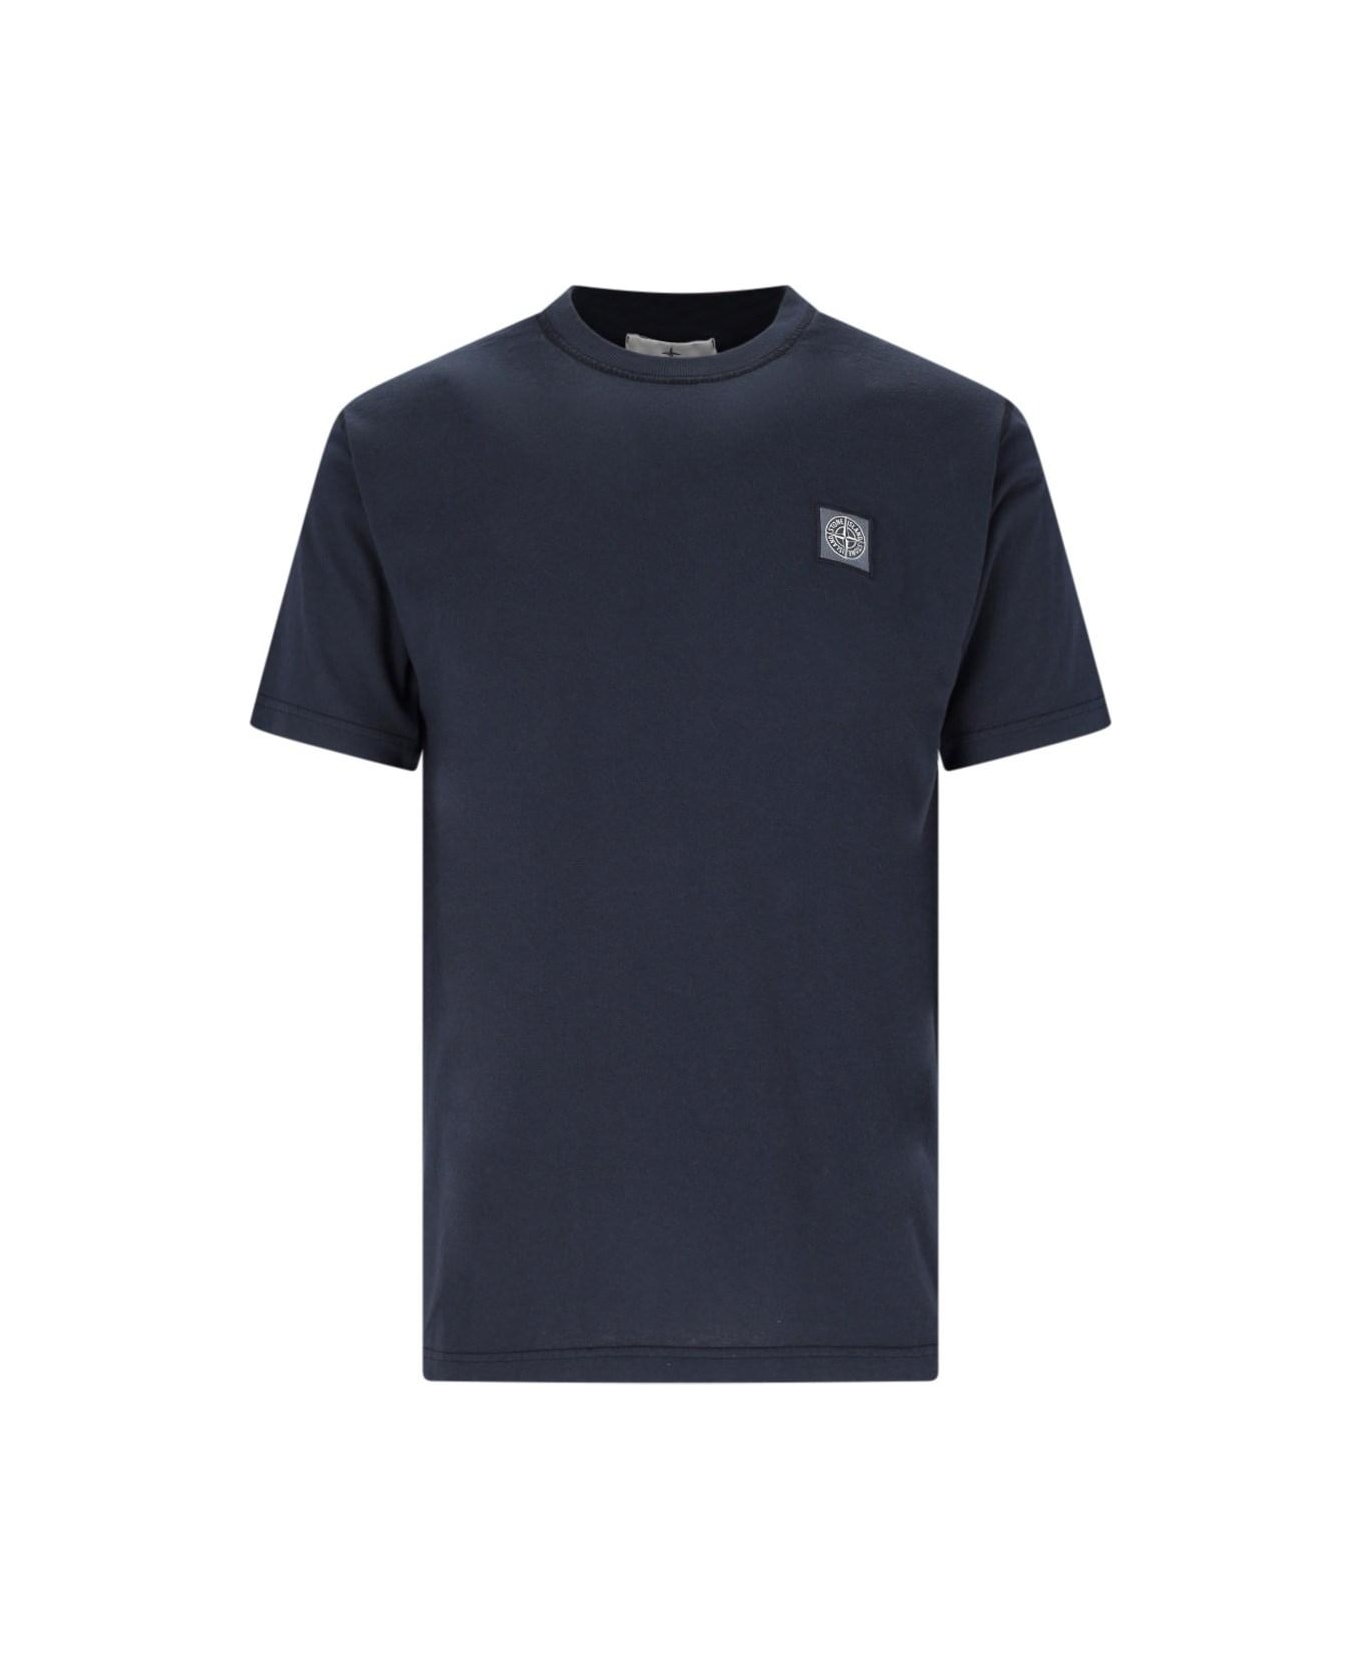 Stone Island Cotton T-shirt - Blue